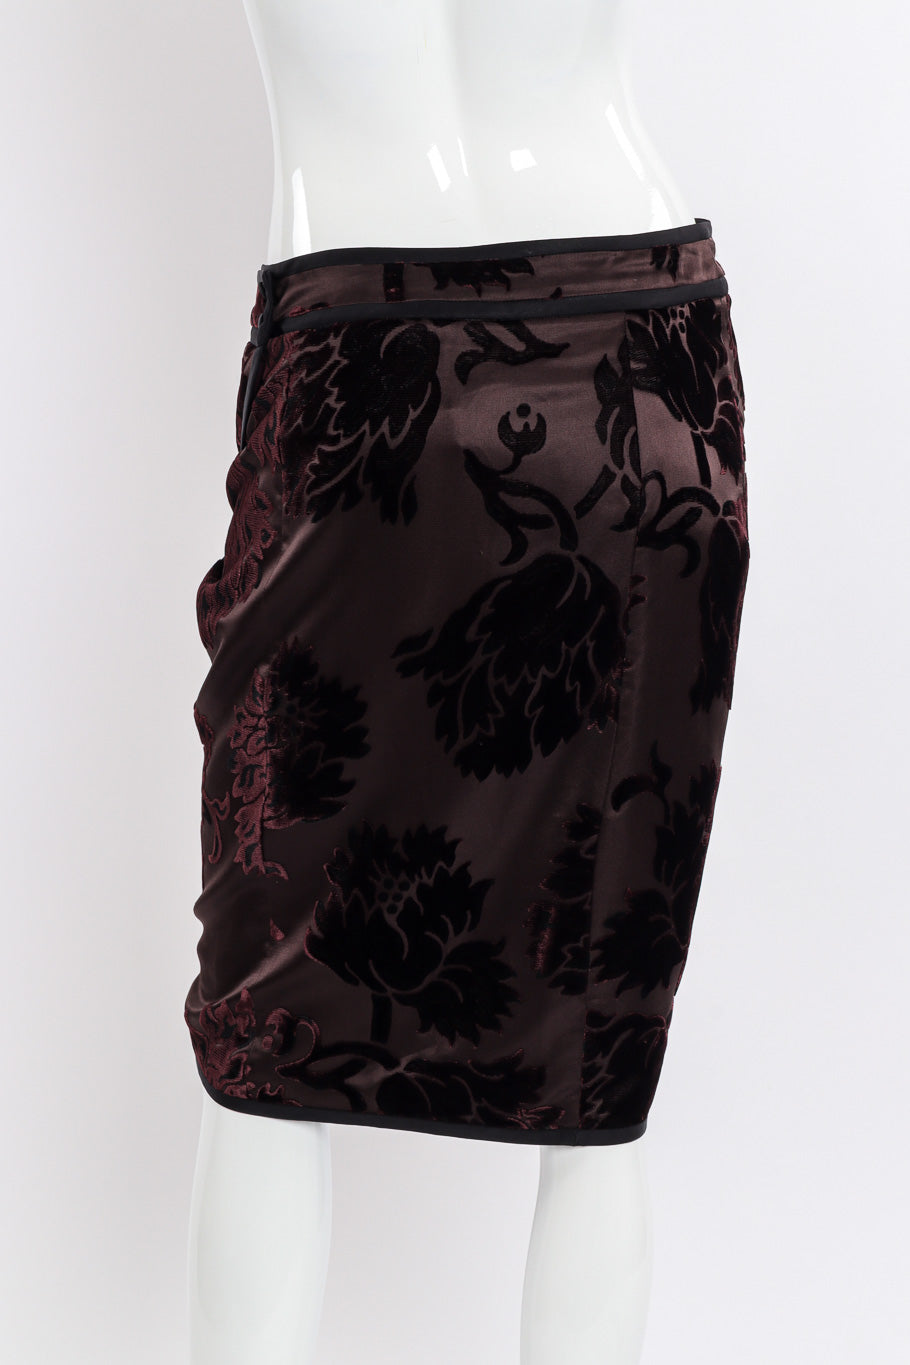 Gucci Velvet Burnout Wrap Skirt back view on mannequin @Recessla